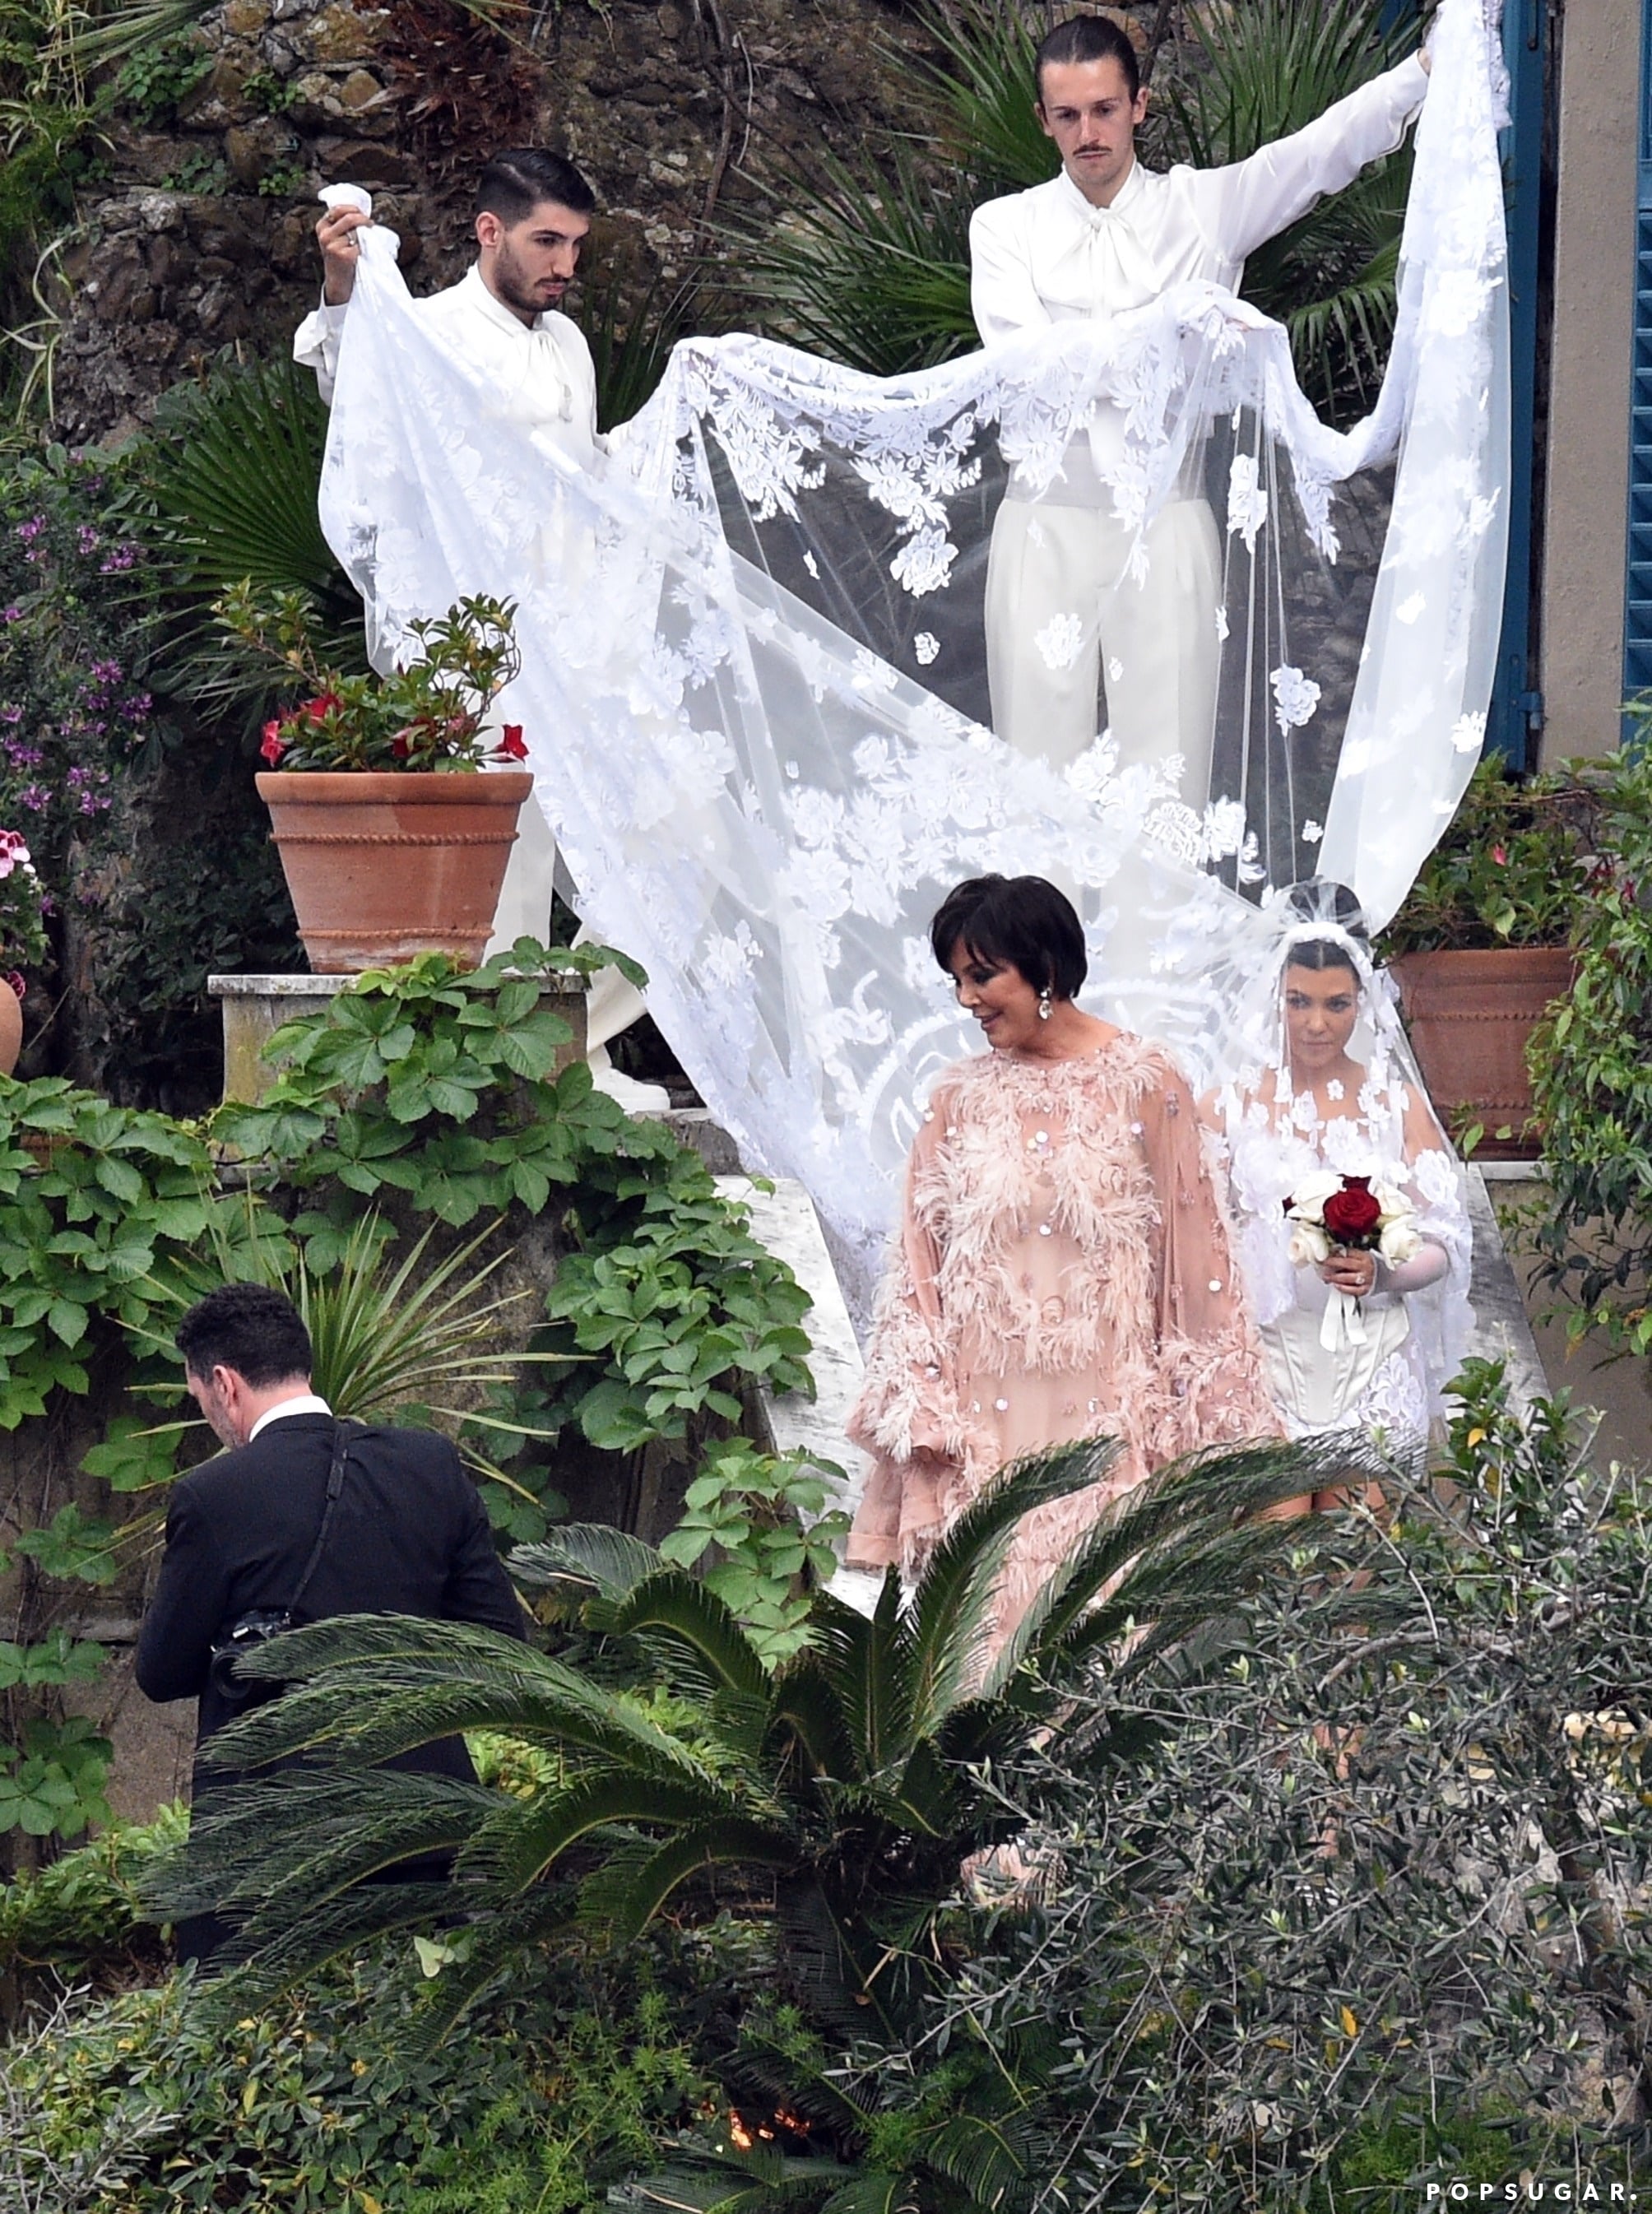 Why Rob Kardashian Didn't Attend Kourtney Kardashian's Italian Wedding